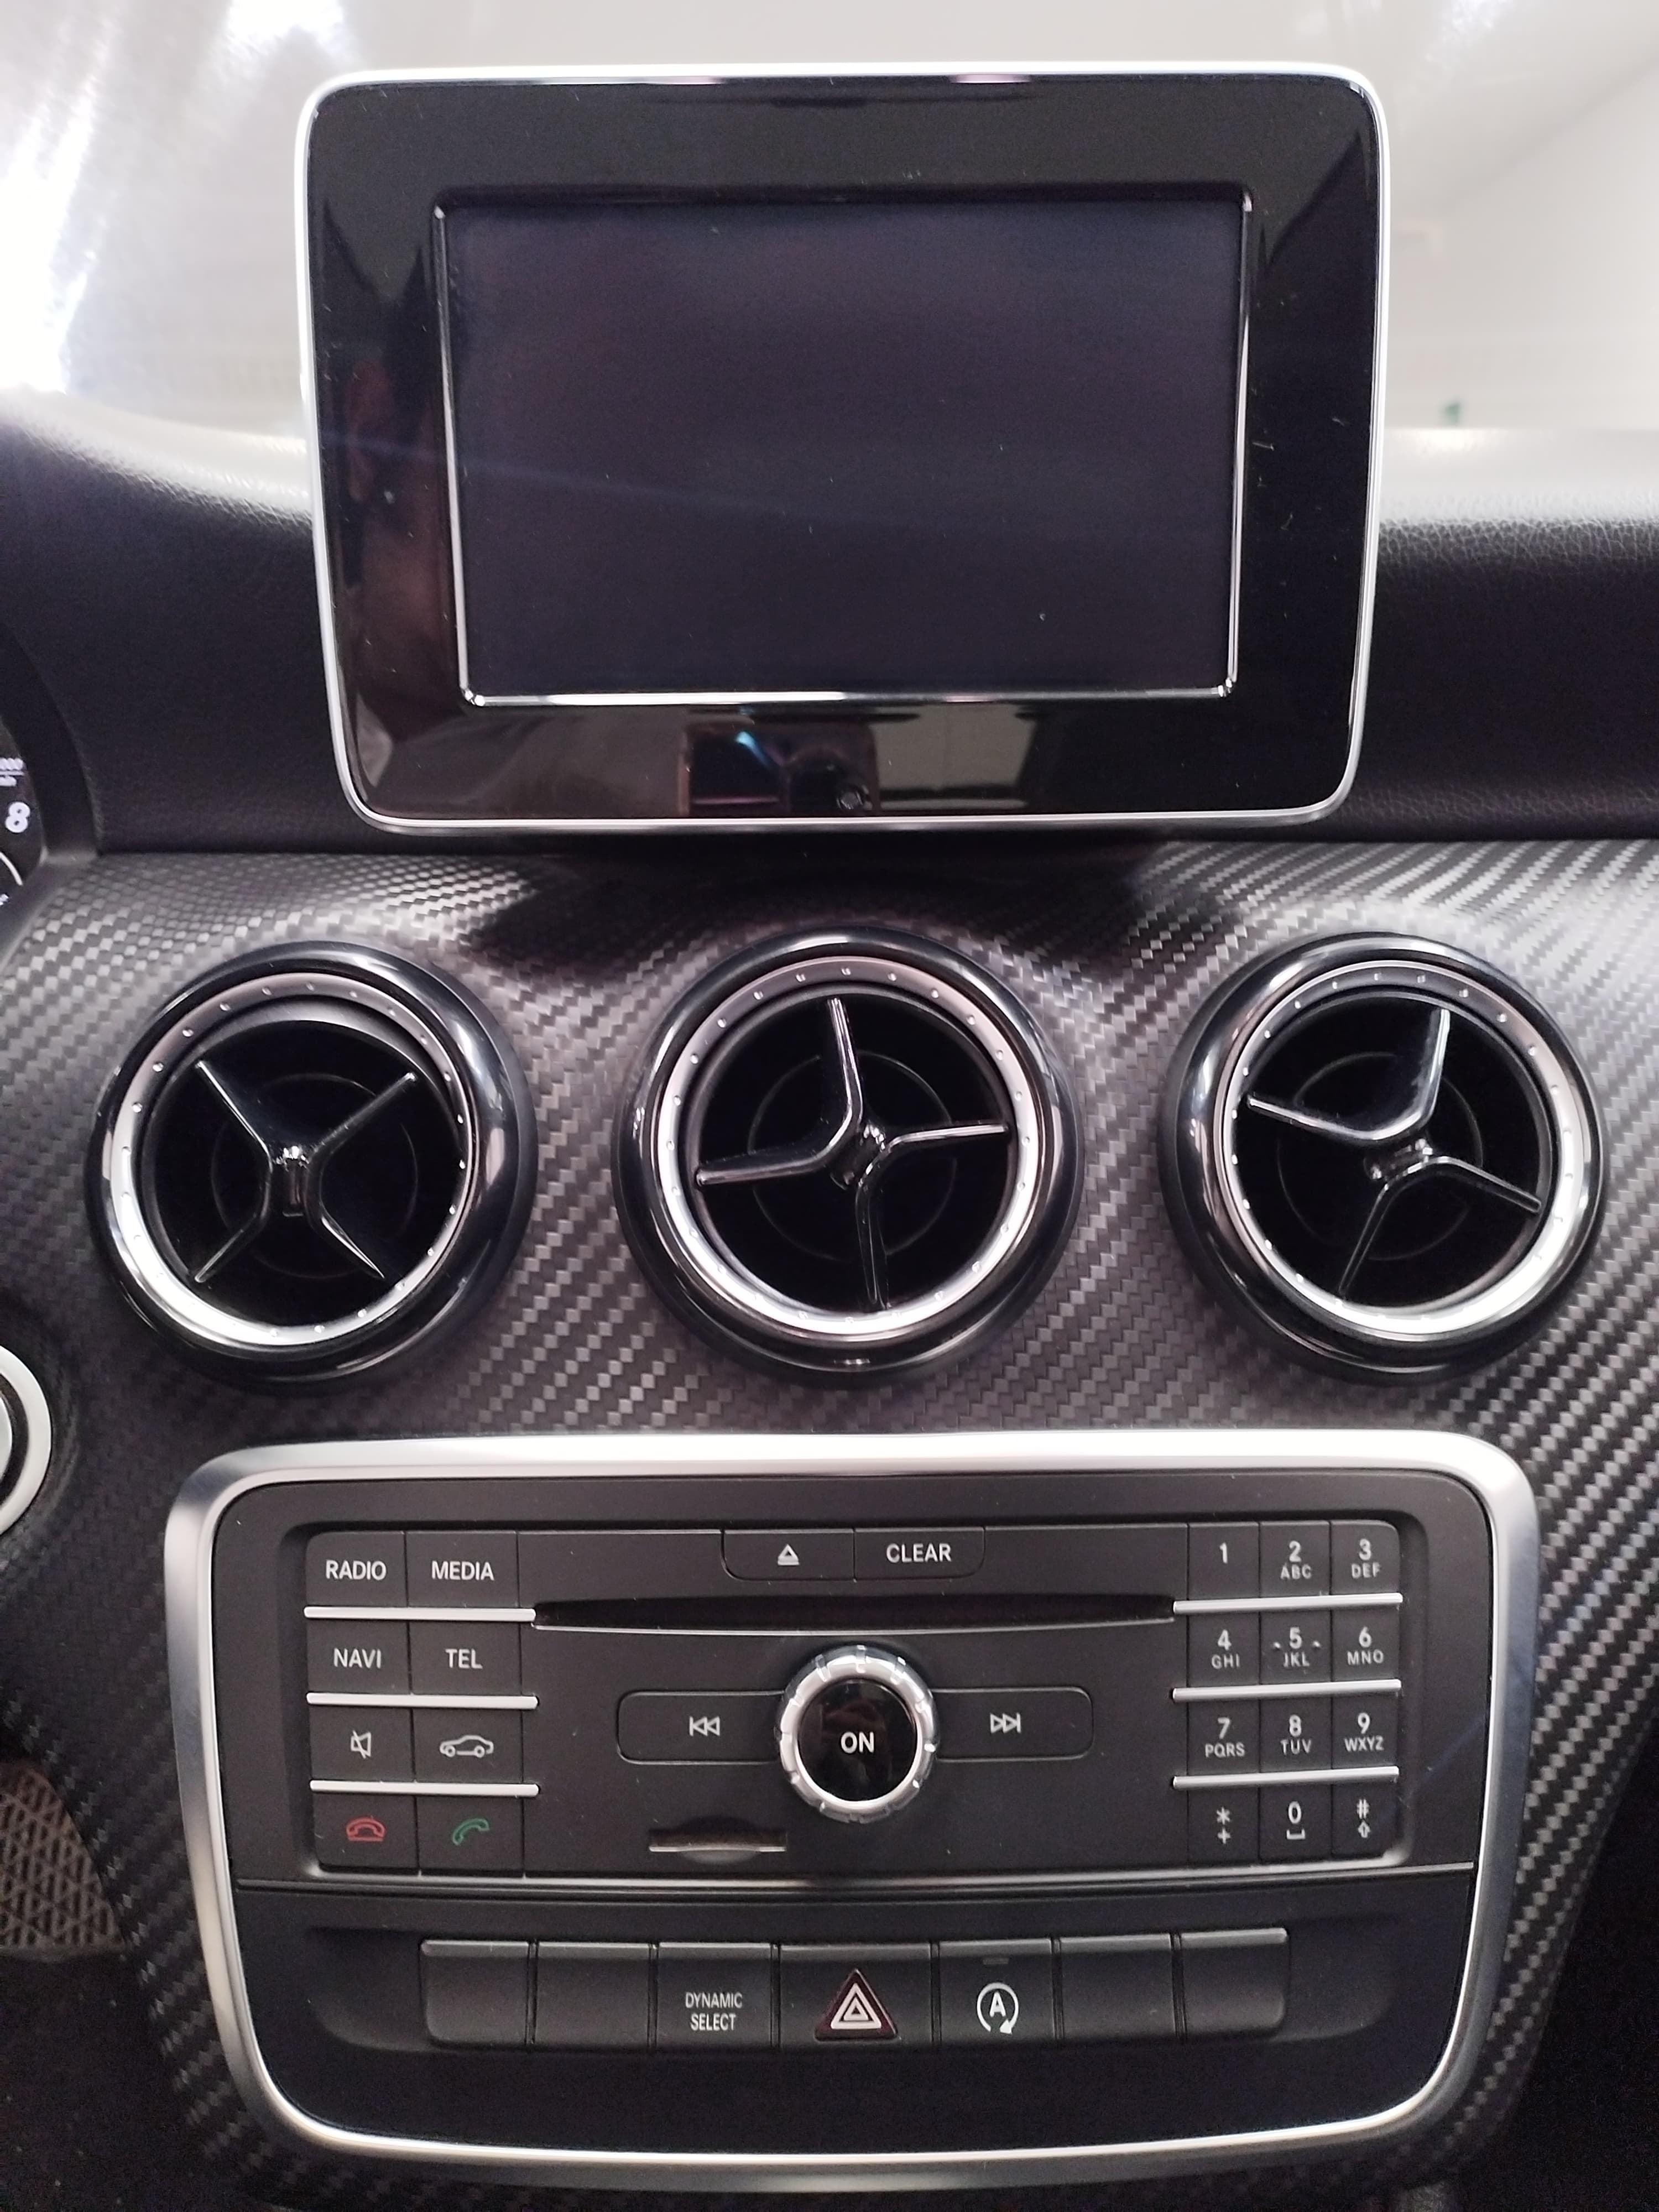 2017 Mercedes-Benz Clase GLA VUD 5 pts. GLA180 CGI, 1.6T, 156 HP, TA